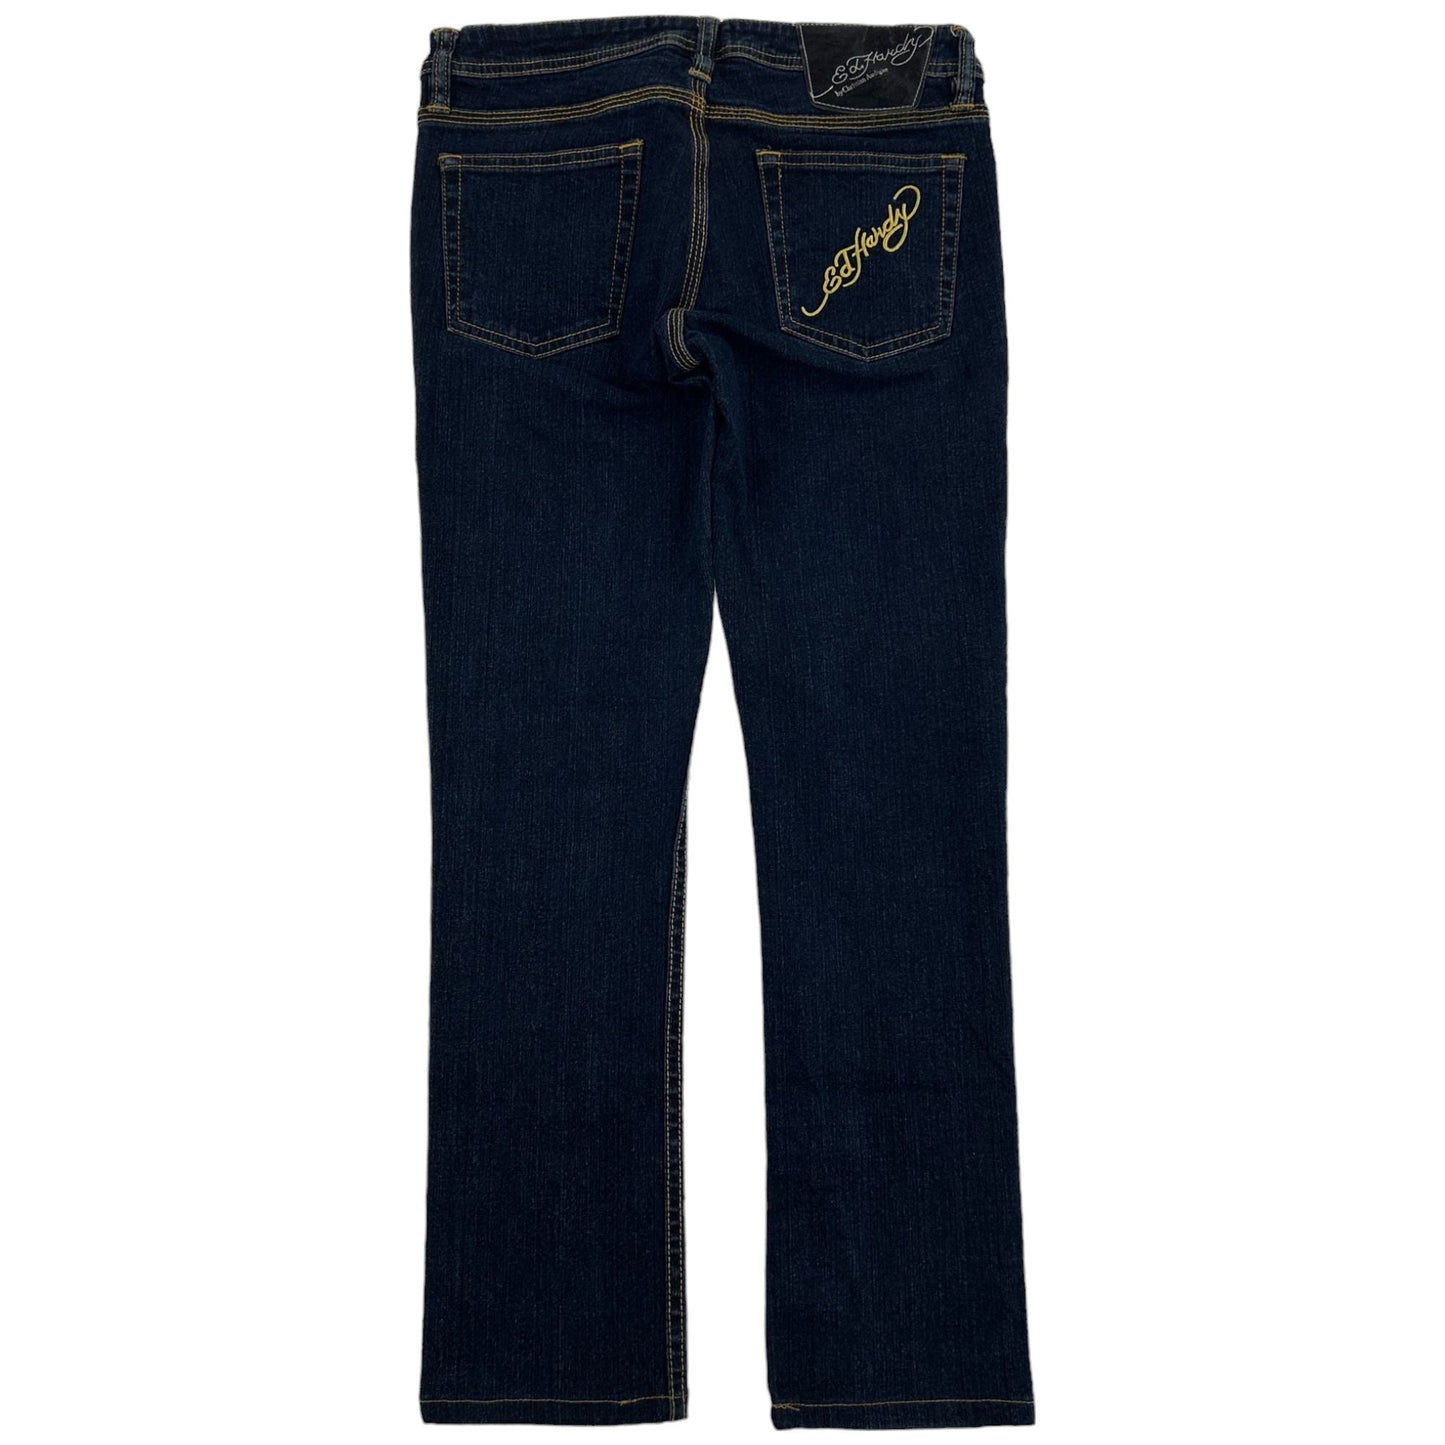 Vintage Ed Hardy Lowrise Jeans Woman's Size W28